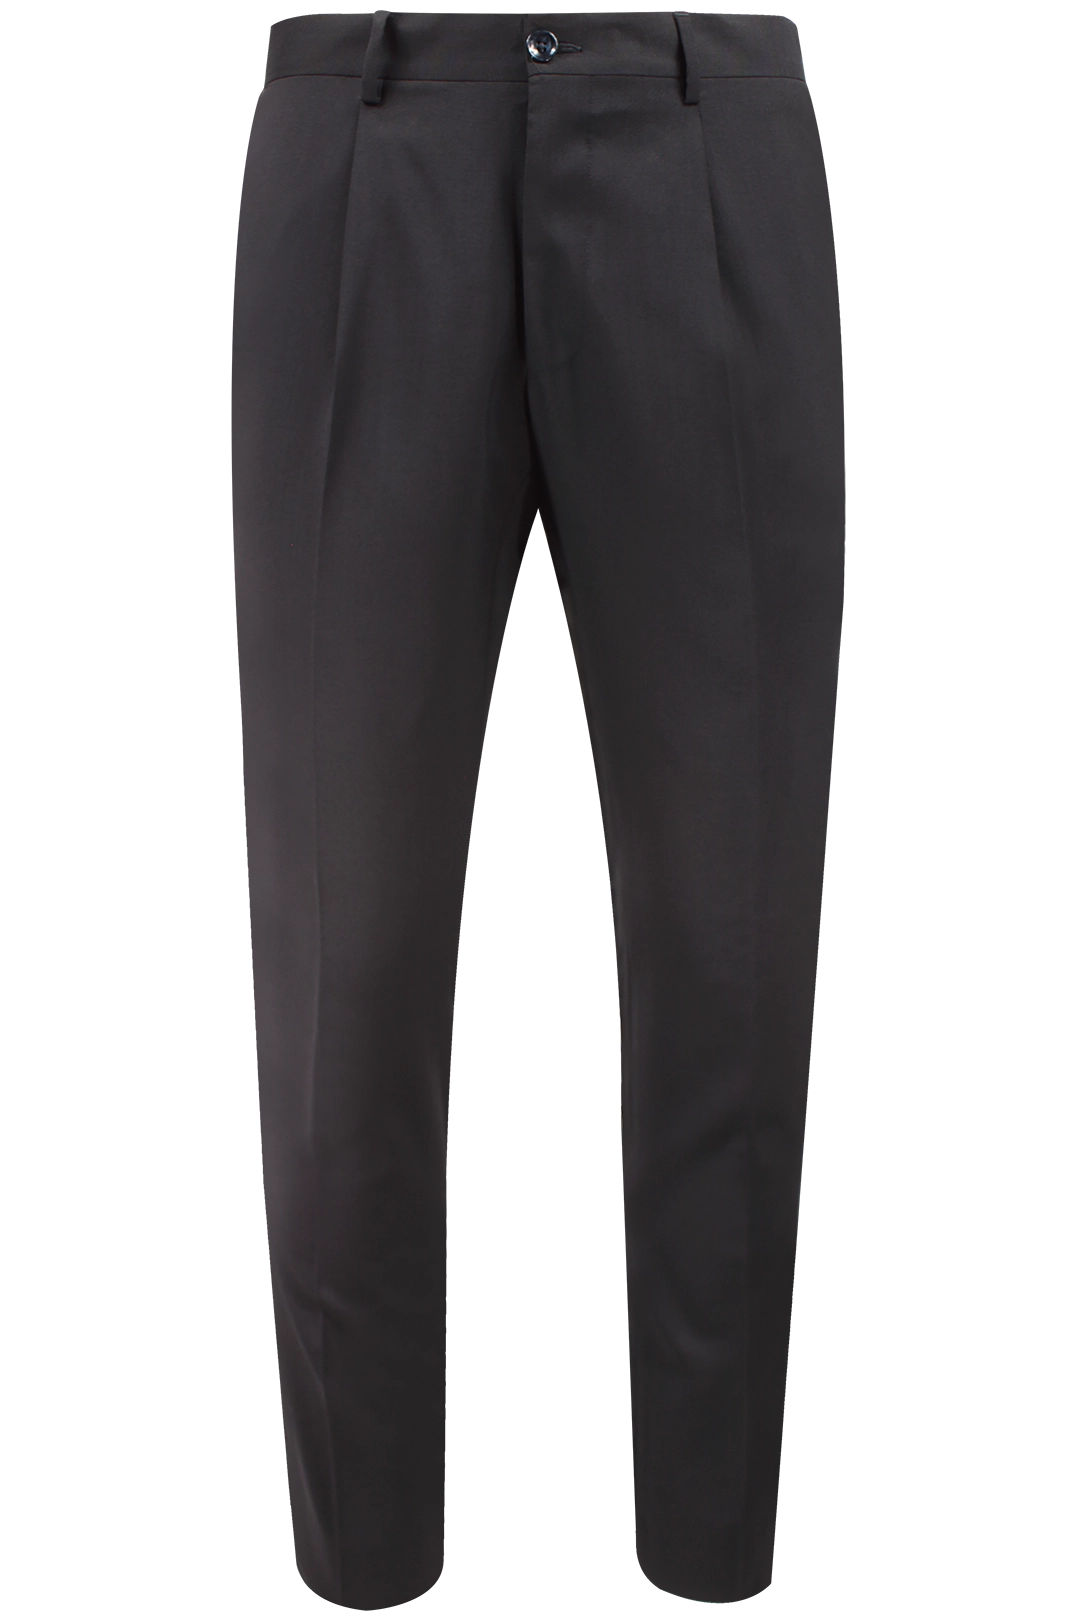 Pantalone con pince in tela di lana nera